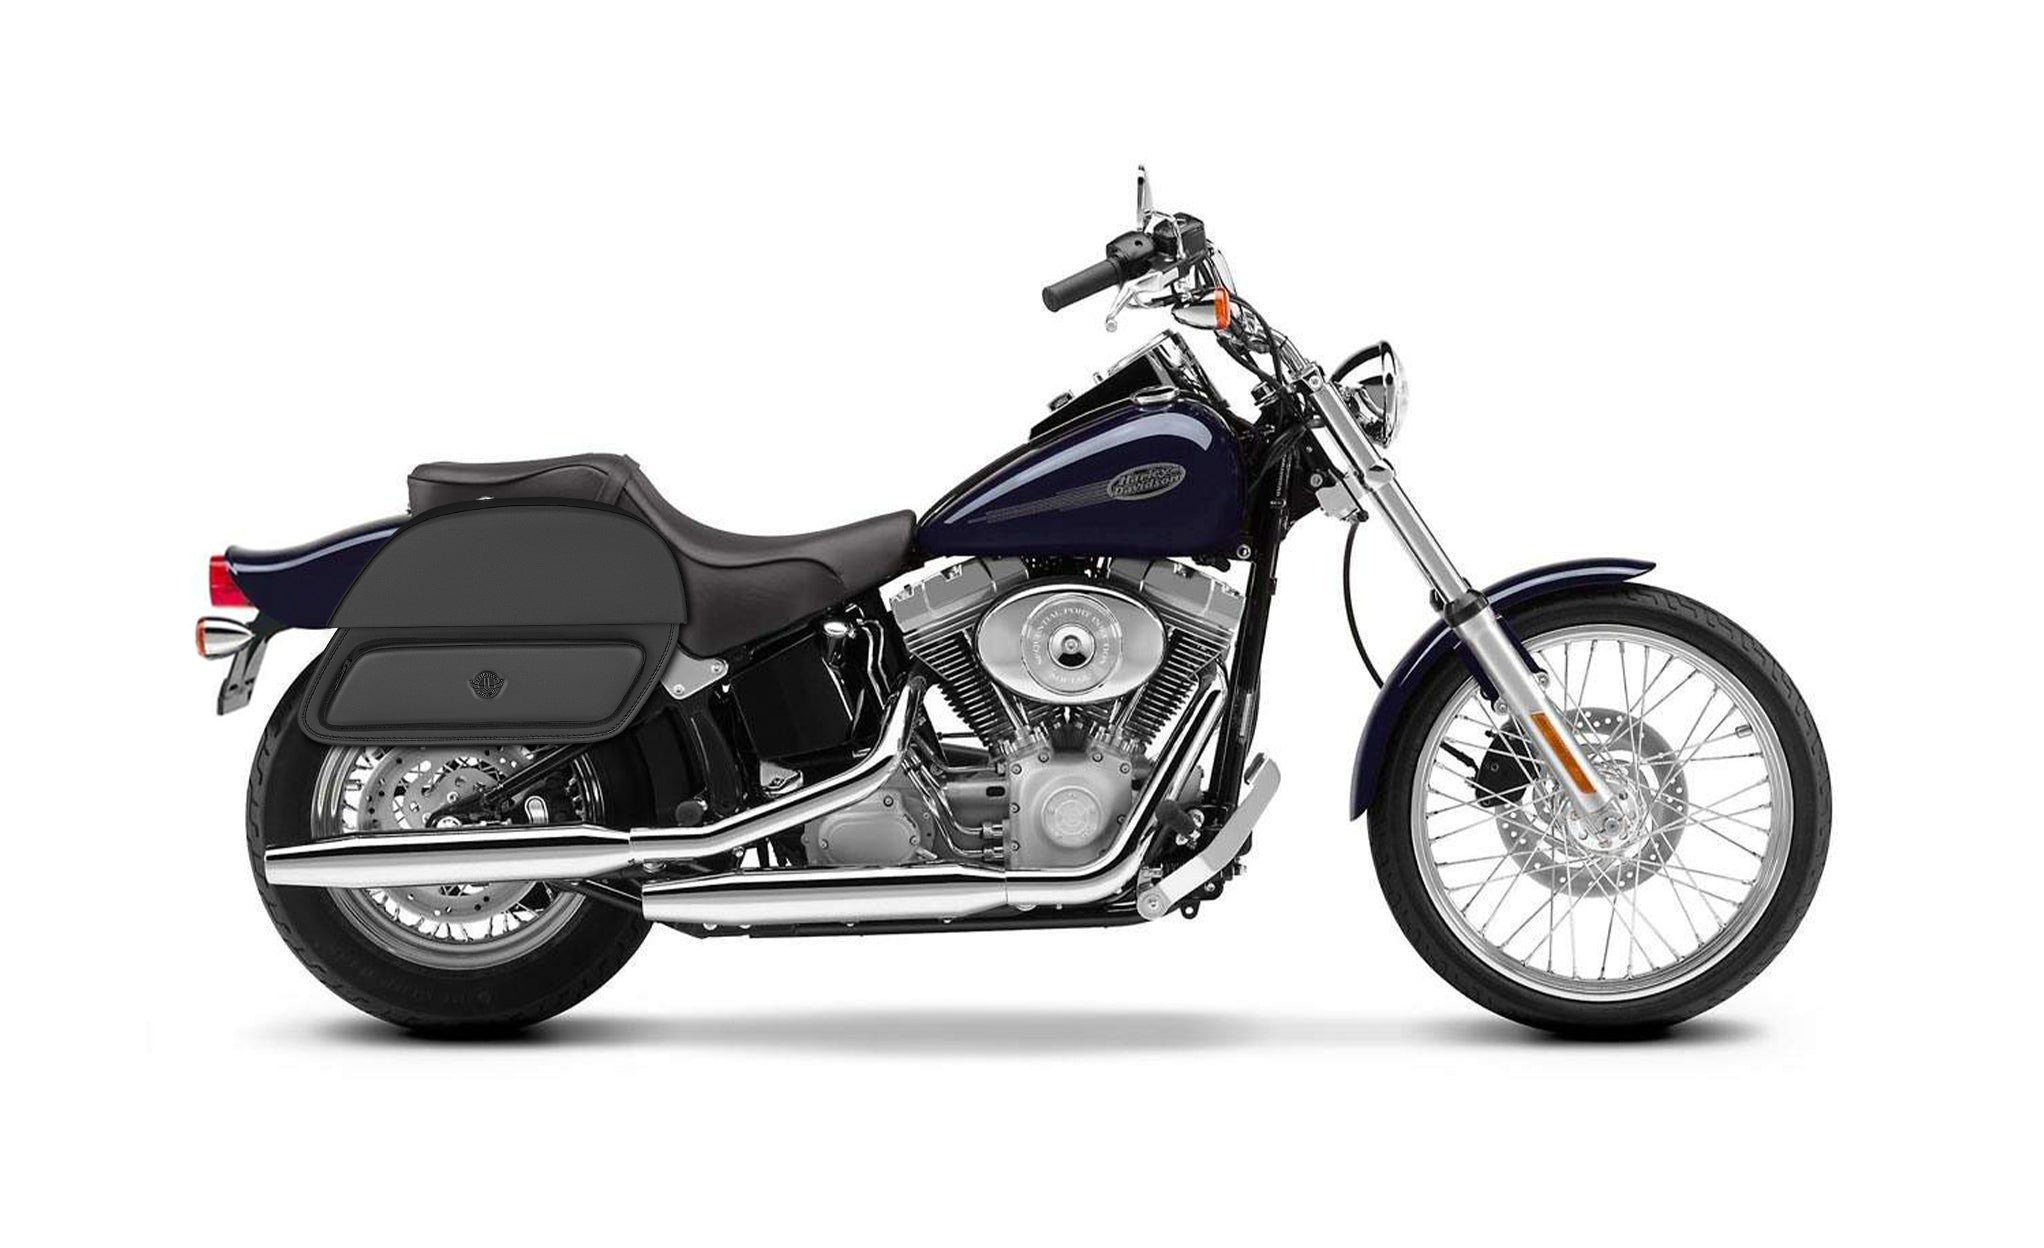 28L - Pantheon Medium Motorcycle Saddlebags for Harley Softail Standard FXST/I on Bike Photo @expand